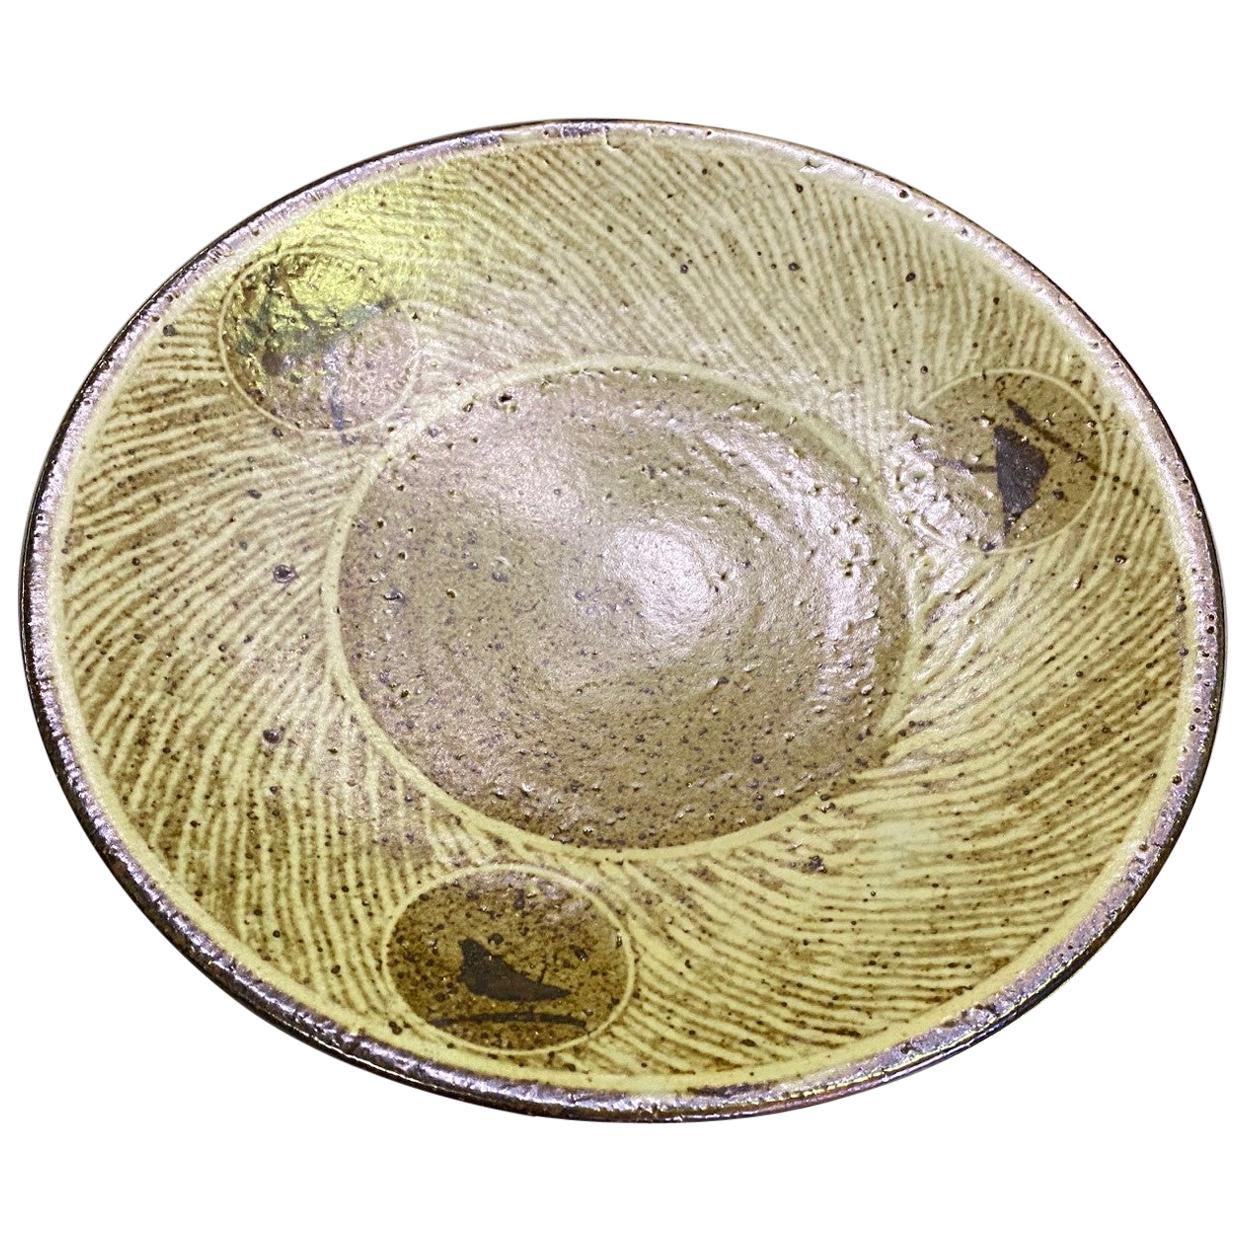 Tatsuzo Shimaoka Japanese Glazed Rope Inlay Pottery Ceramic Plate Low Bowl